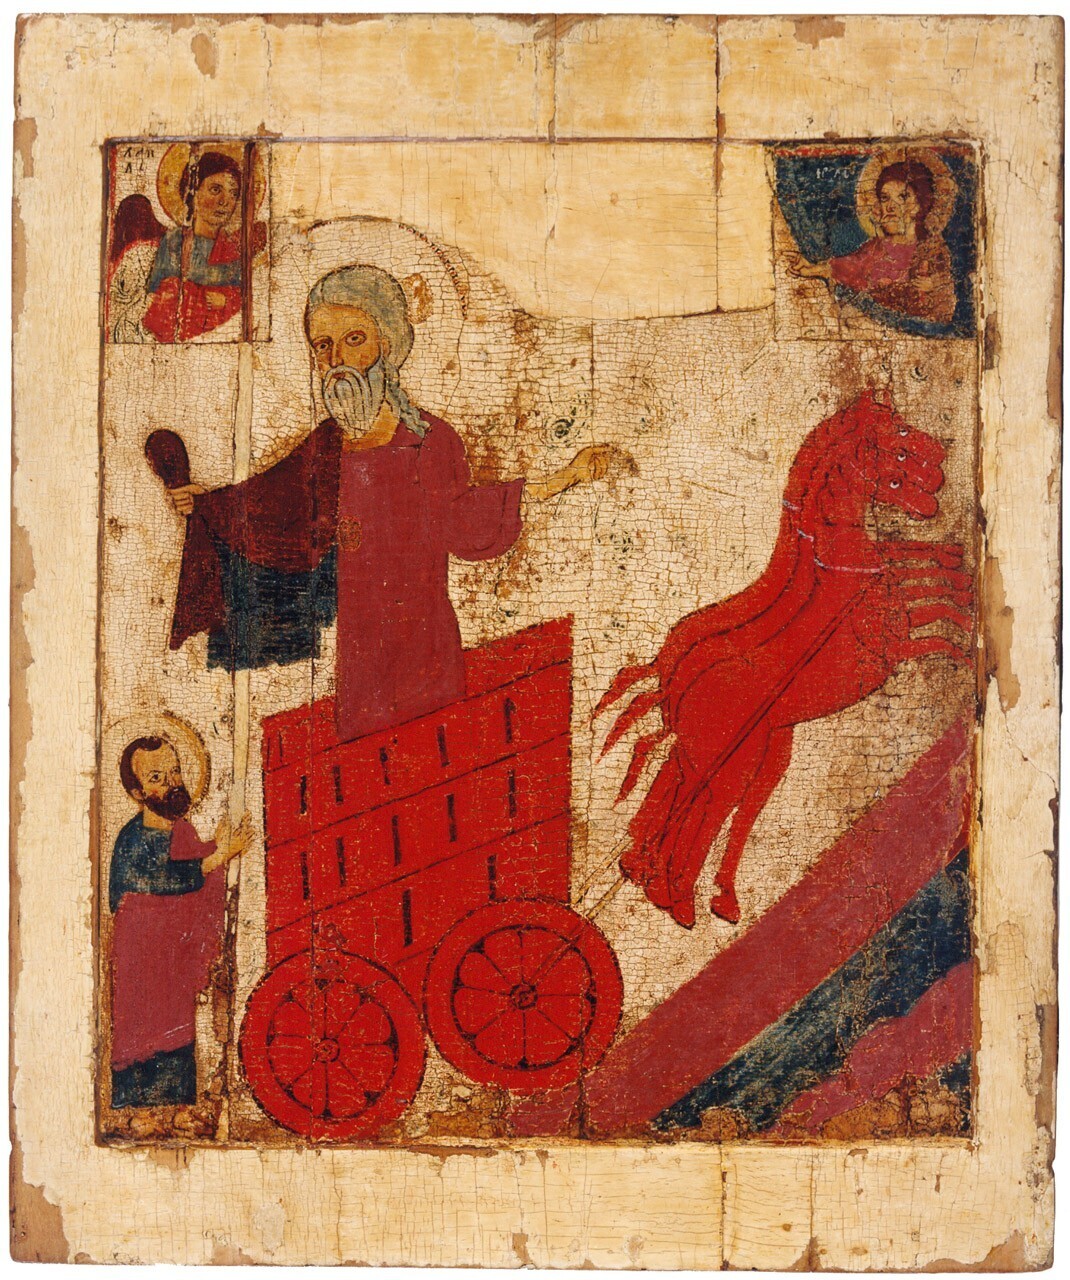 The Ascension of the Prophet Elijah